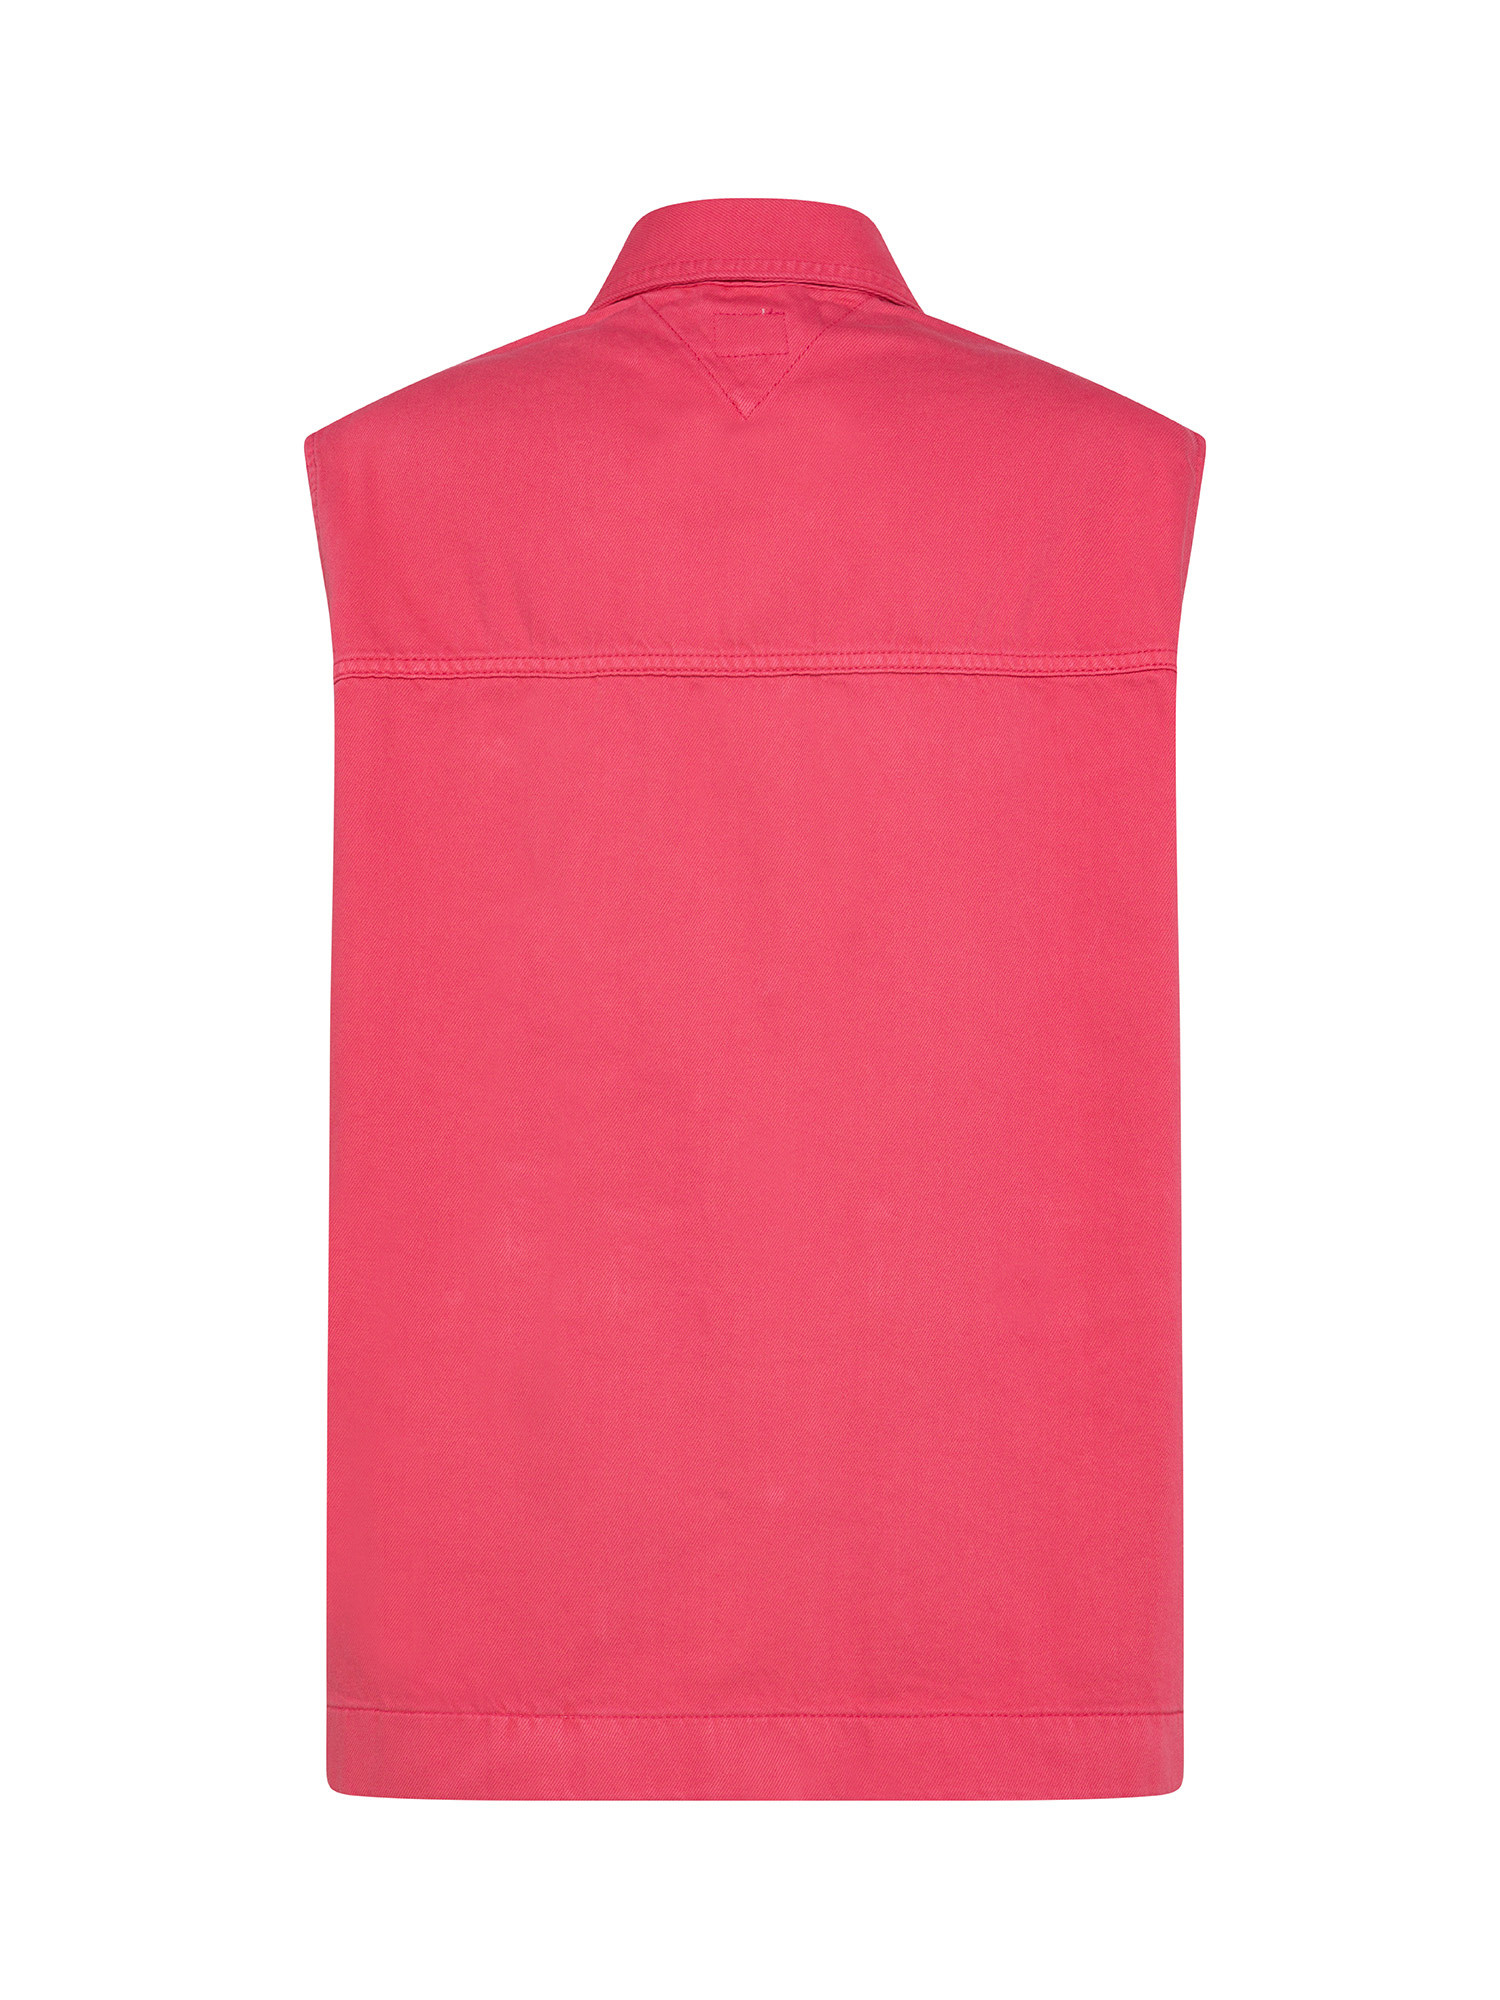 Tommy Jeans - Colored denim vest, Pink Fuchsia, large image number 1